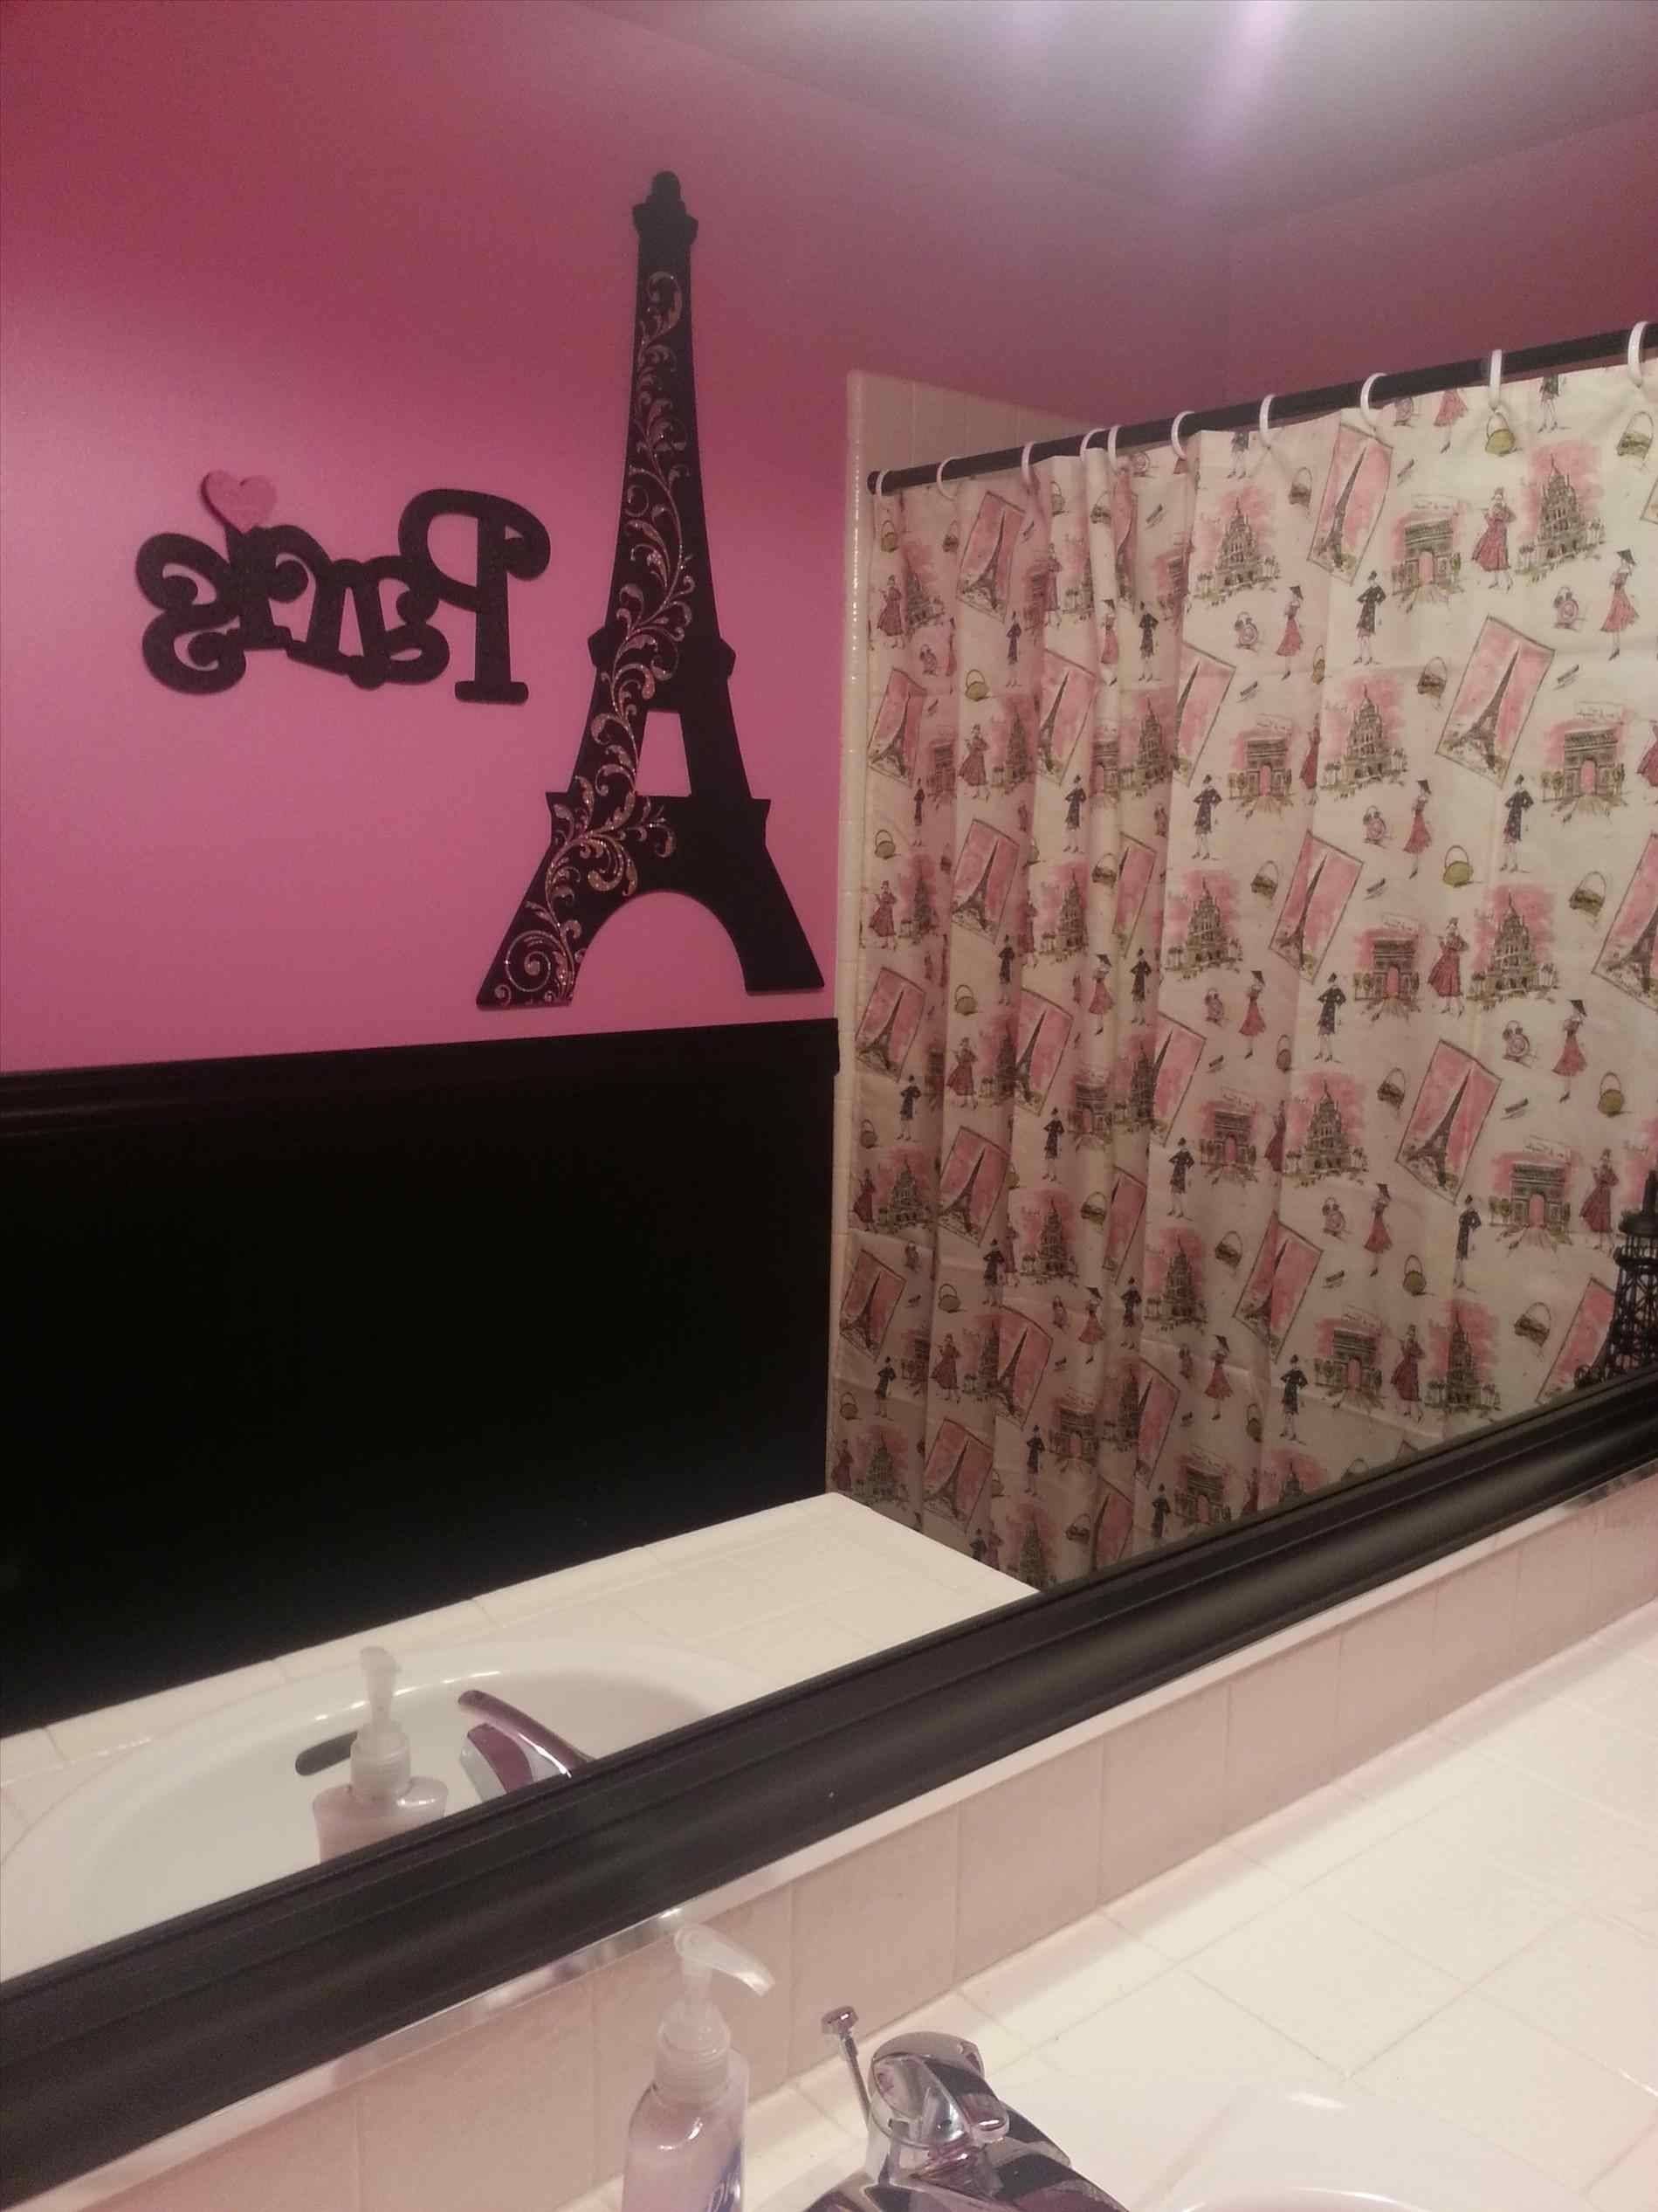 Paris Bathroom Wall Decor | Wpxsinfo Regarding Latest Paris Themed Wall Art (View 20 of 20)